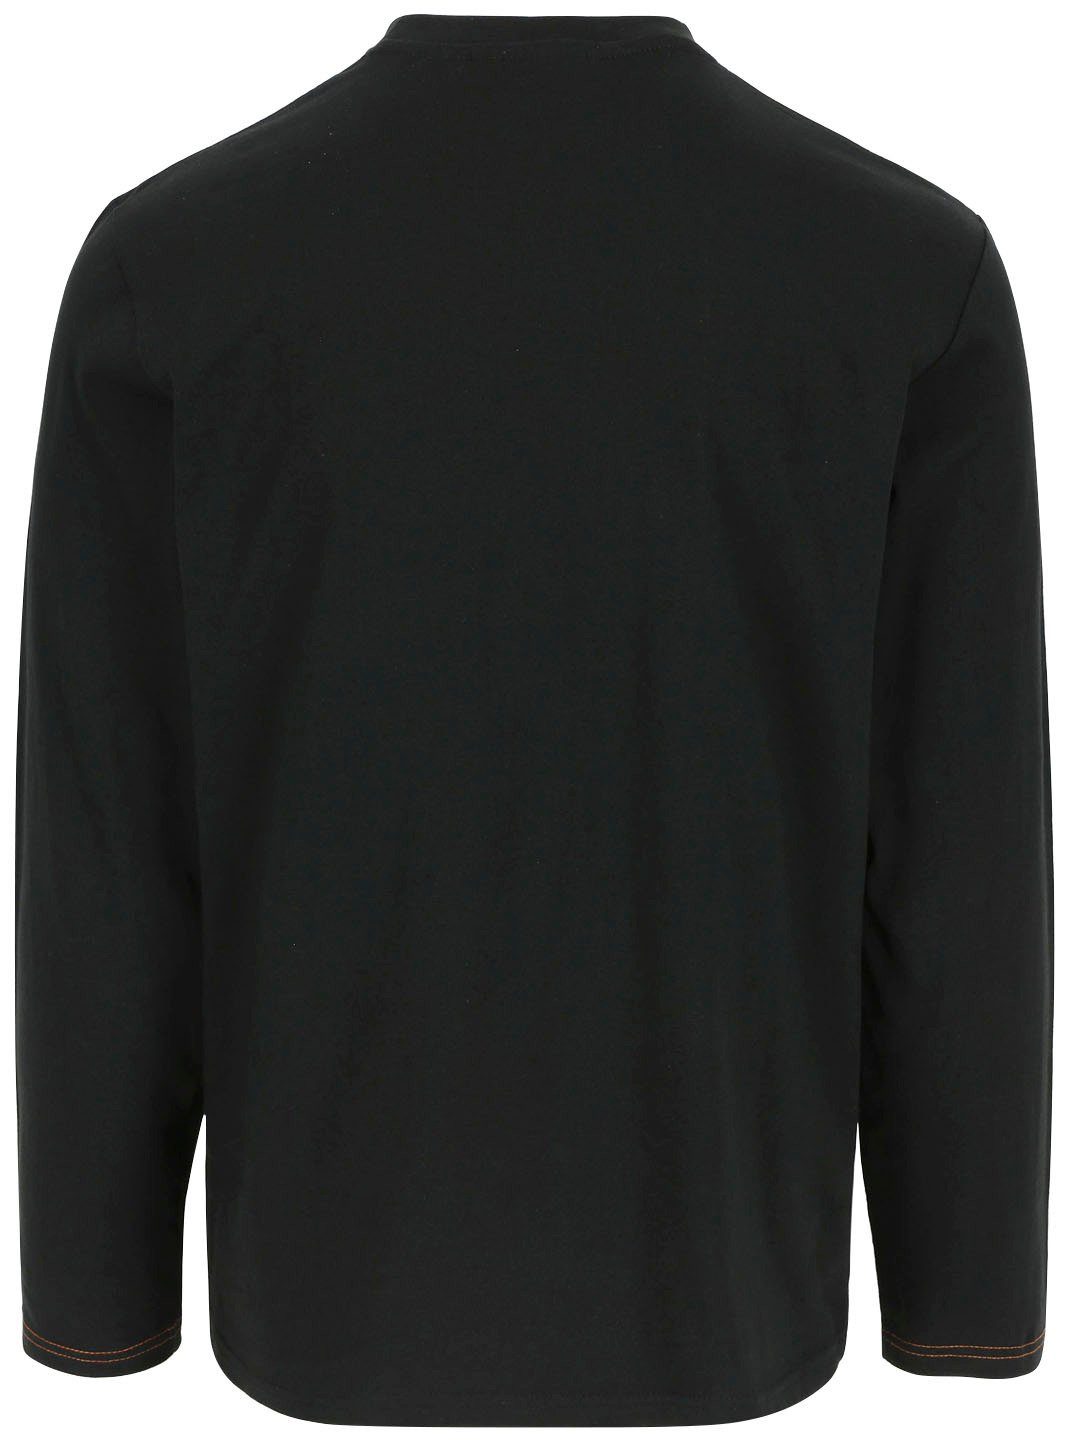 Basic langärmlig vorgeschrumpfte % t-shirt Herock Baumwolle, schwarz angenehmes Tragegefühl, Noet 100 Langarmshirt